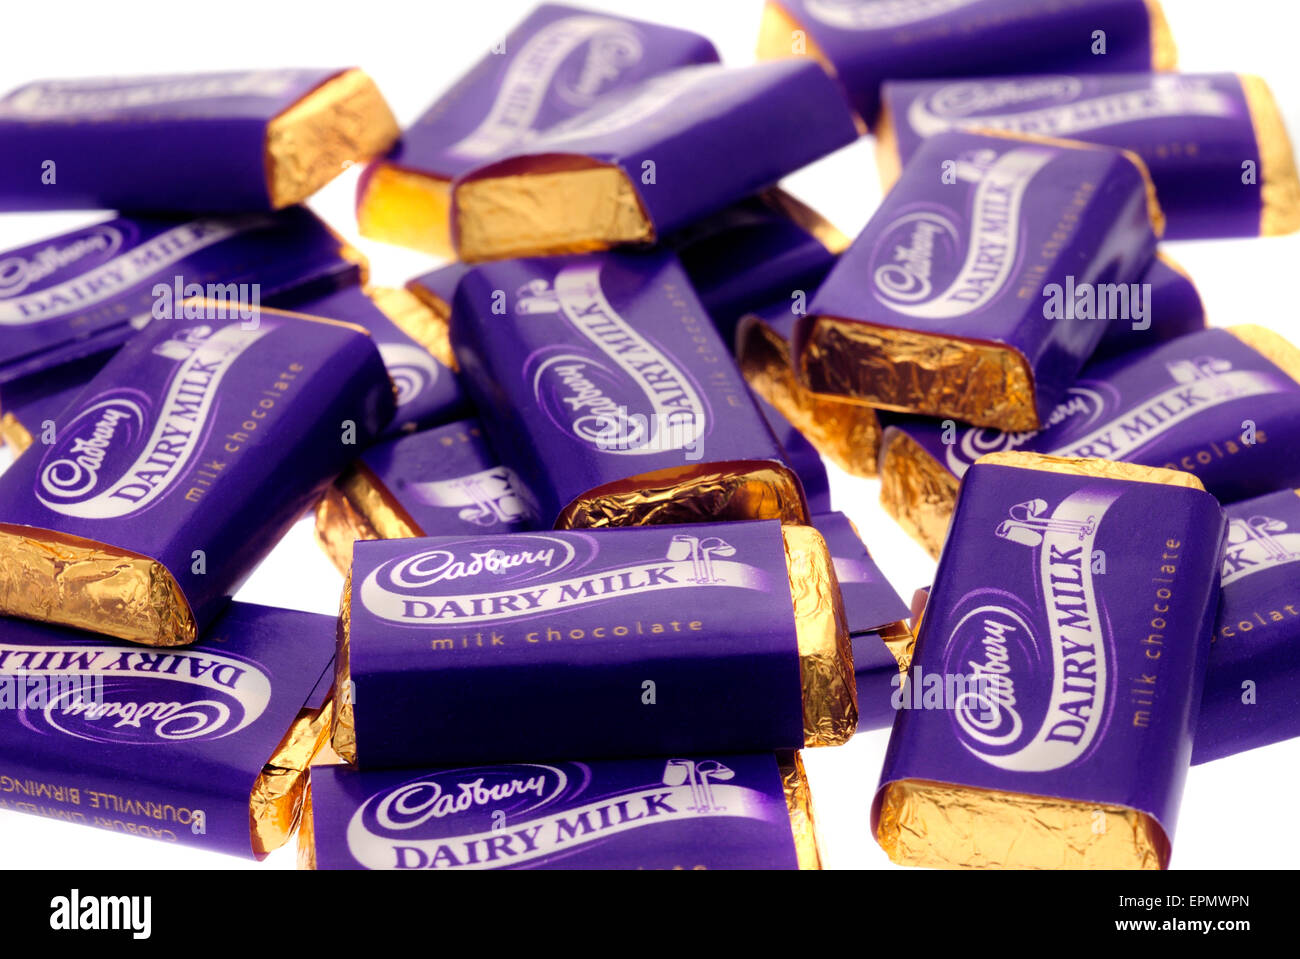 Cadbury dairy milk chocolates hi-res stock photography and images ...